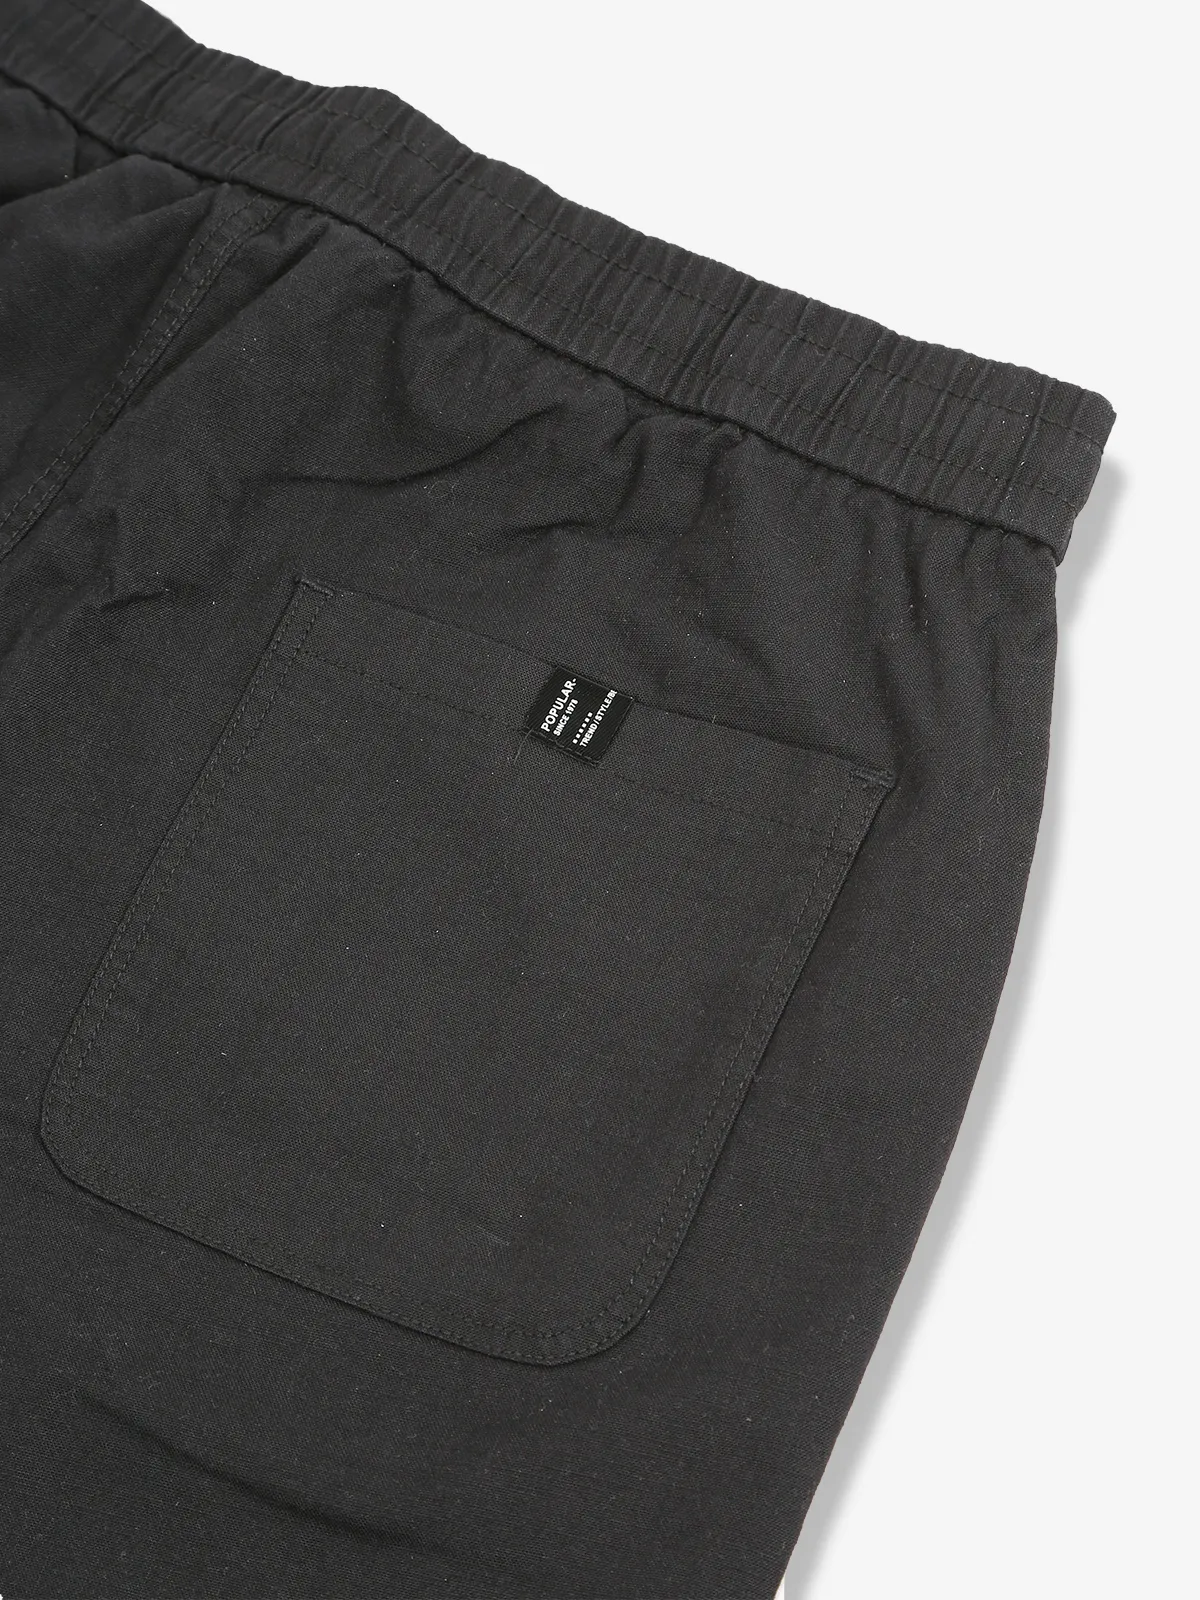 GS78 black cotton solid track pant